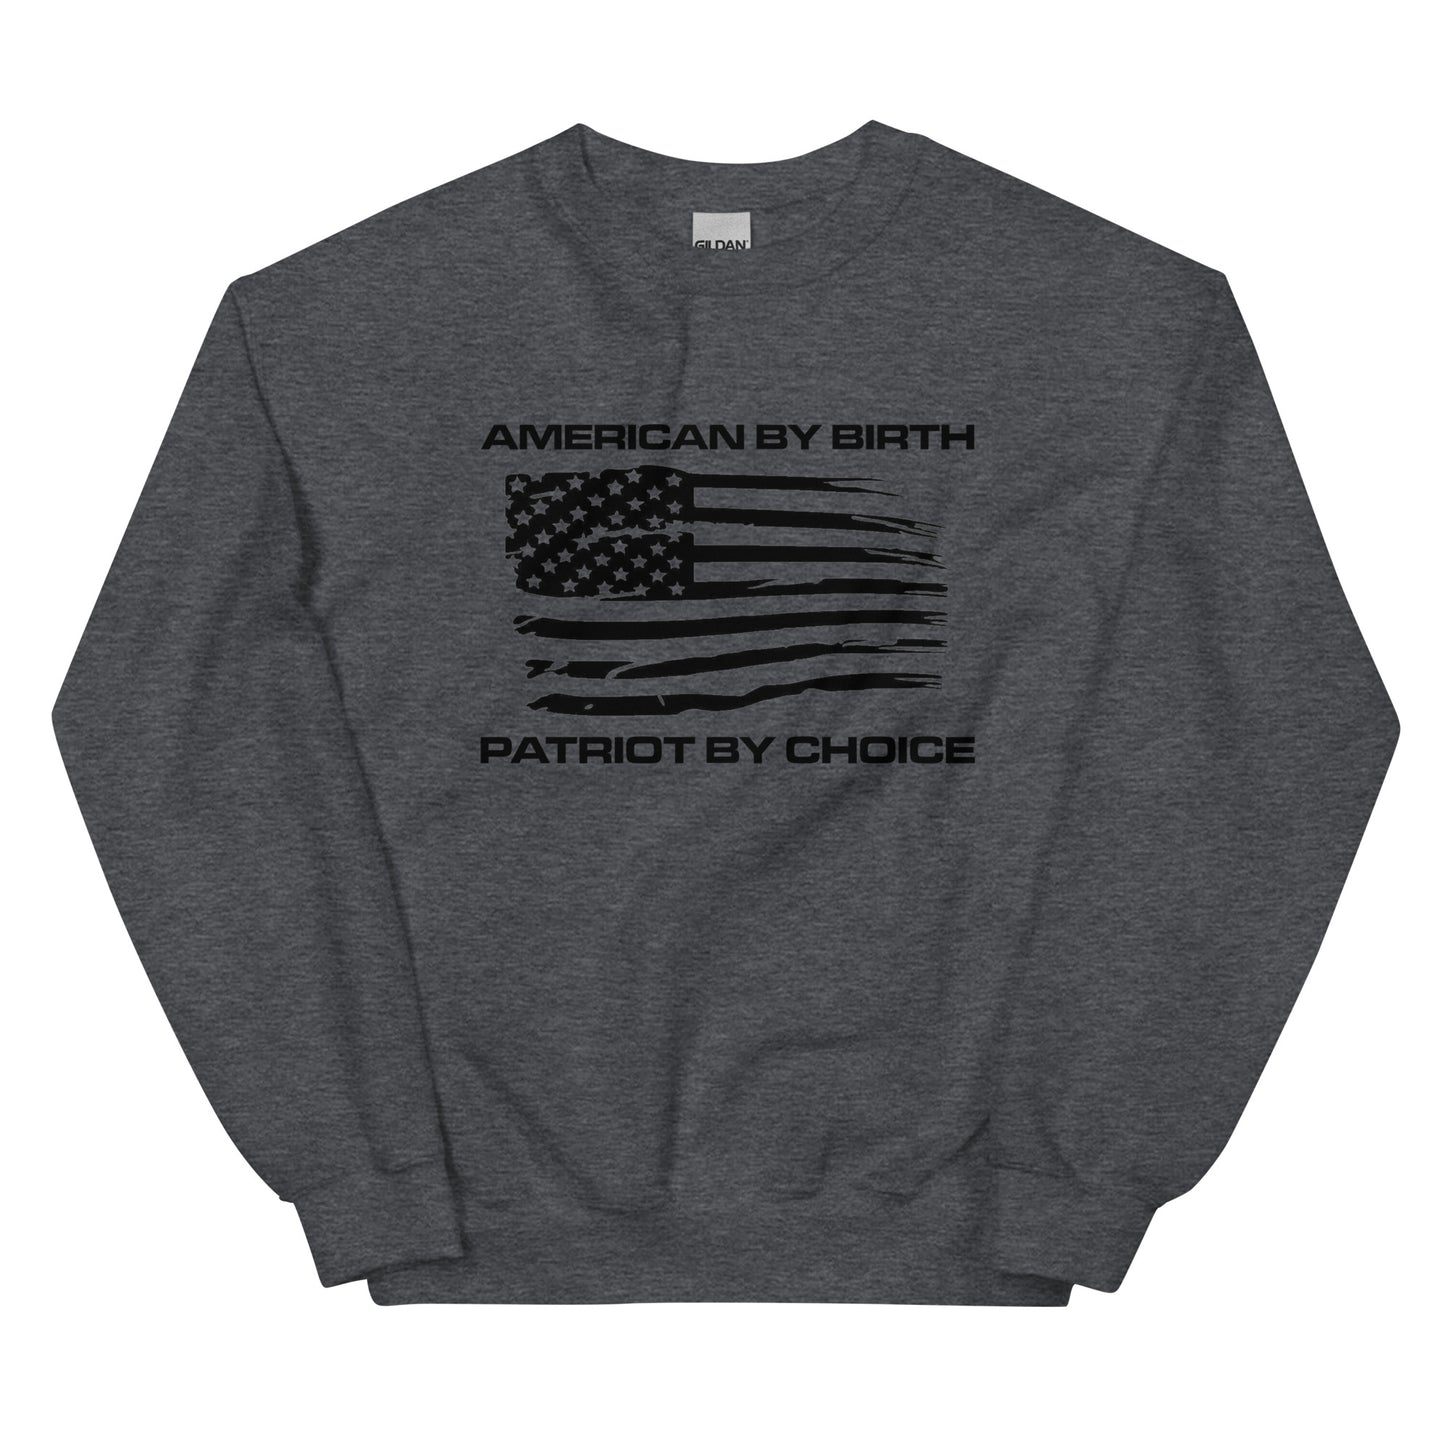 American by Birth Patriot by Choice Unisex Crew Neck Sweatshirt